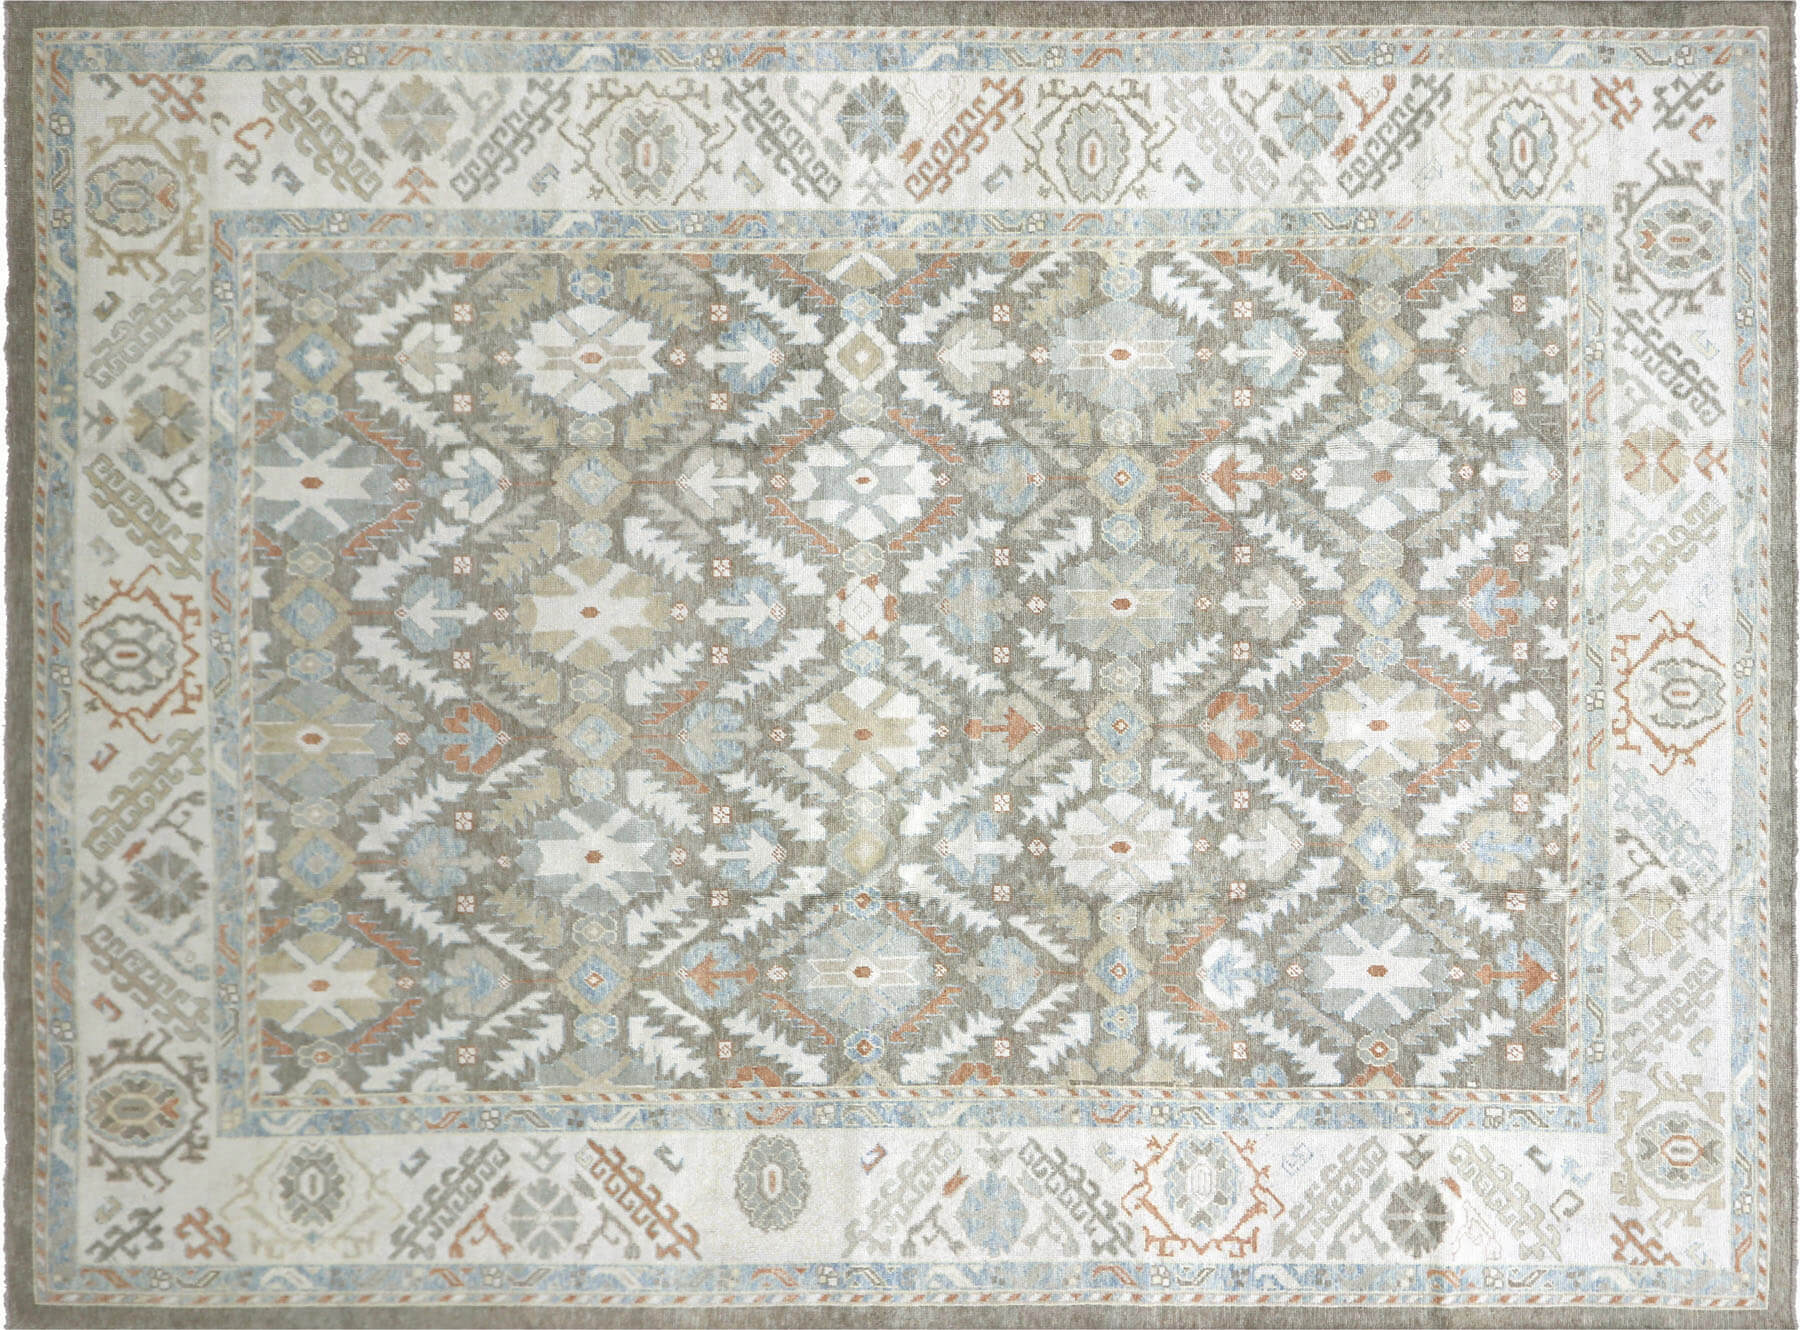 Recently Woven Turkish Oushak Carpet - 10'9" x 14'6"